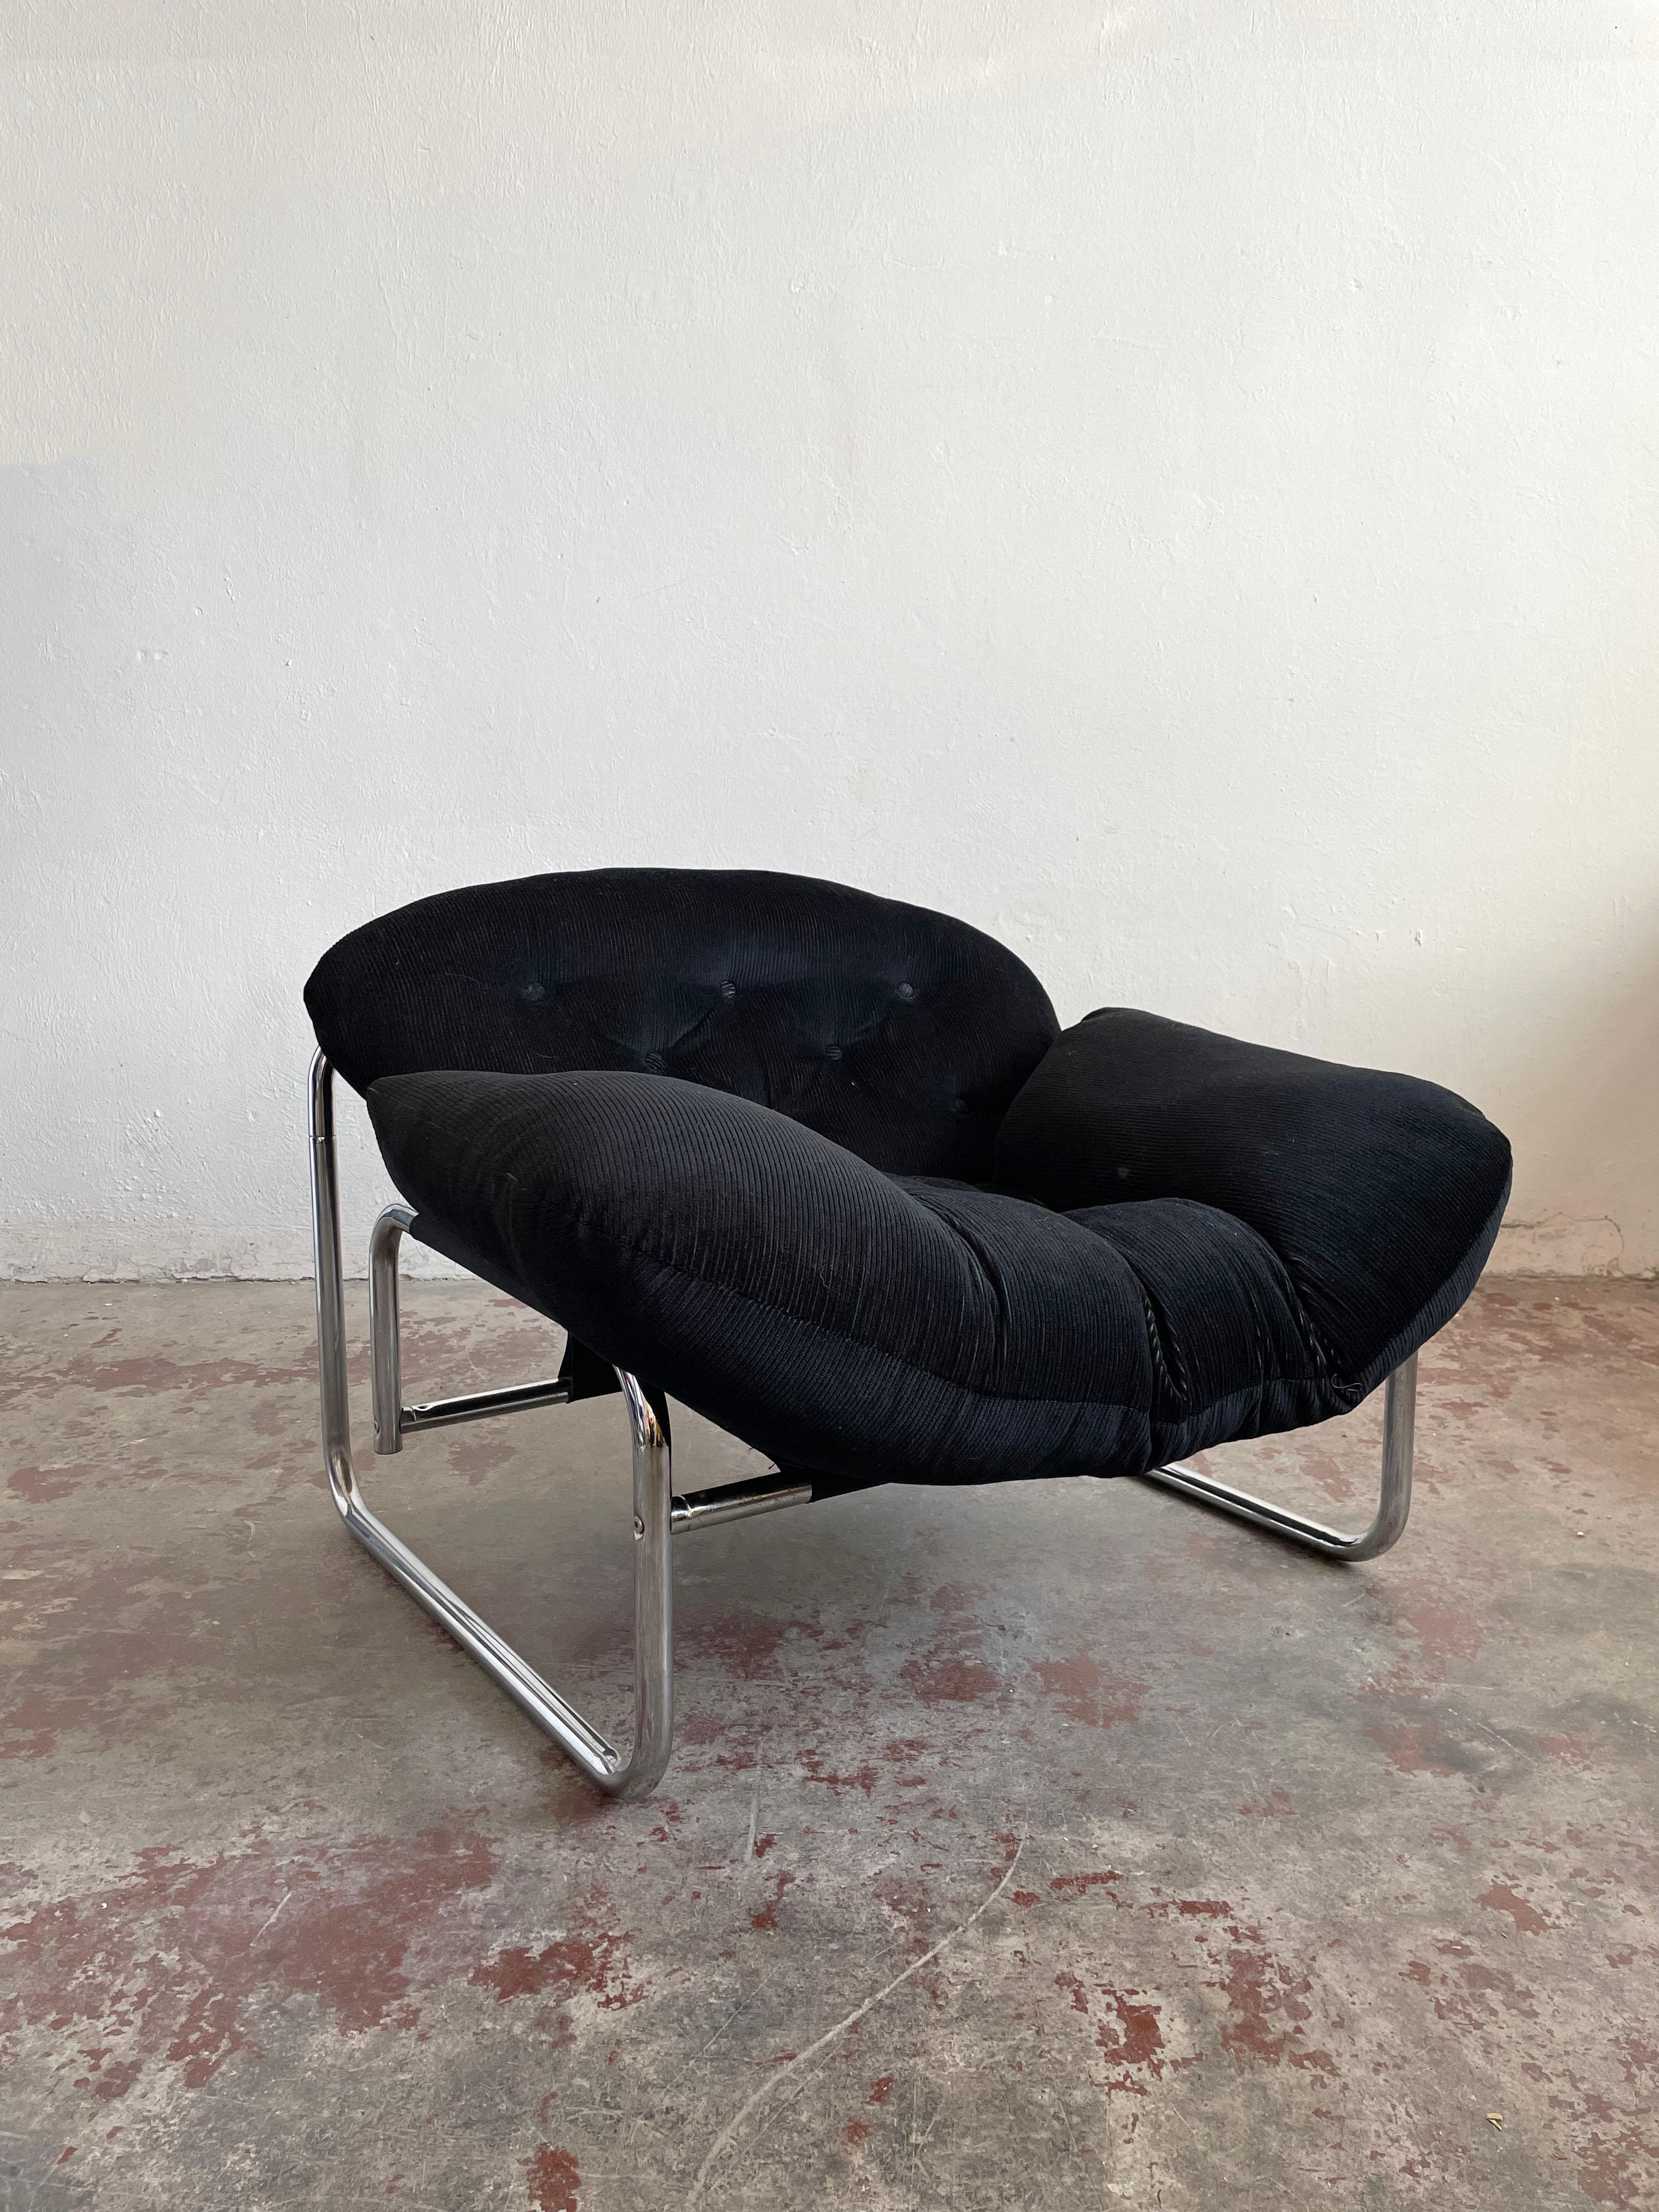 Mid-Century Modern Lounge Chair from Swed Form, Sweden 1970s, Designed by Johan Bertil Häggström